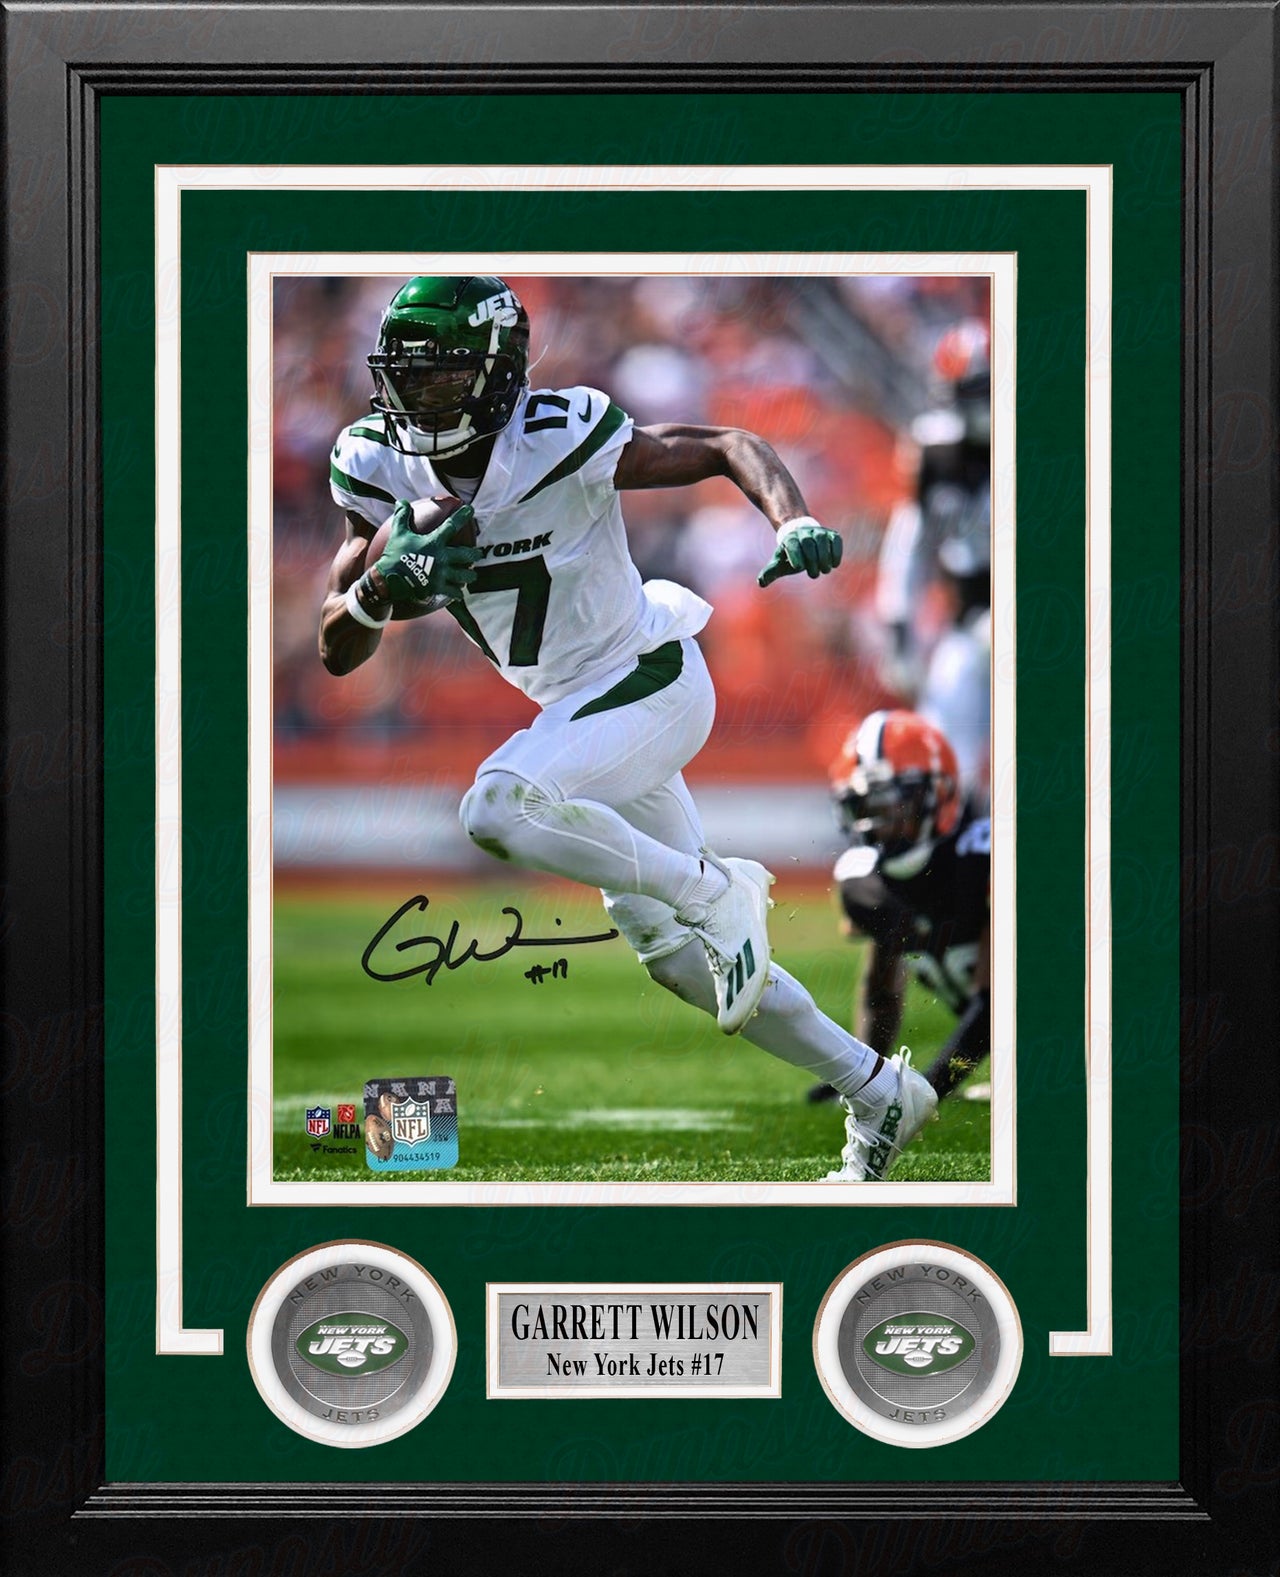 Garrett Wilson in Action New York Jets Autographed 8" x 10" Framed Football Photo